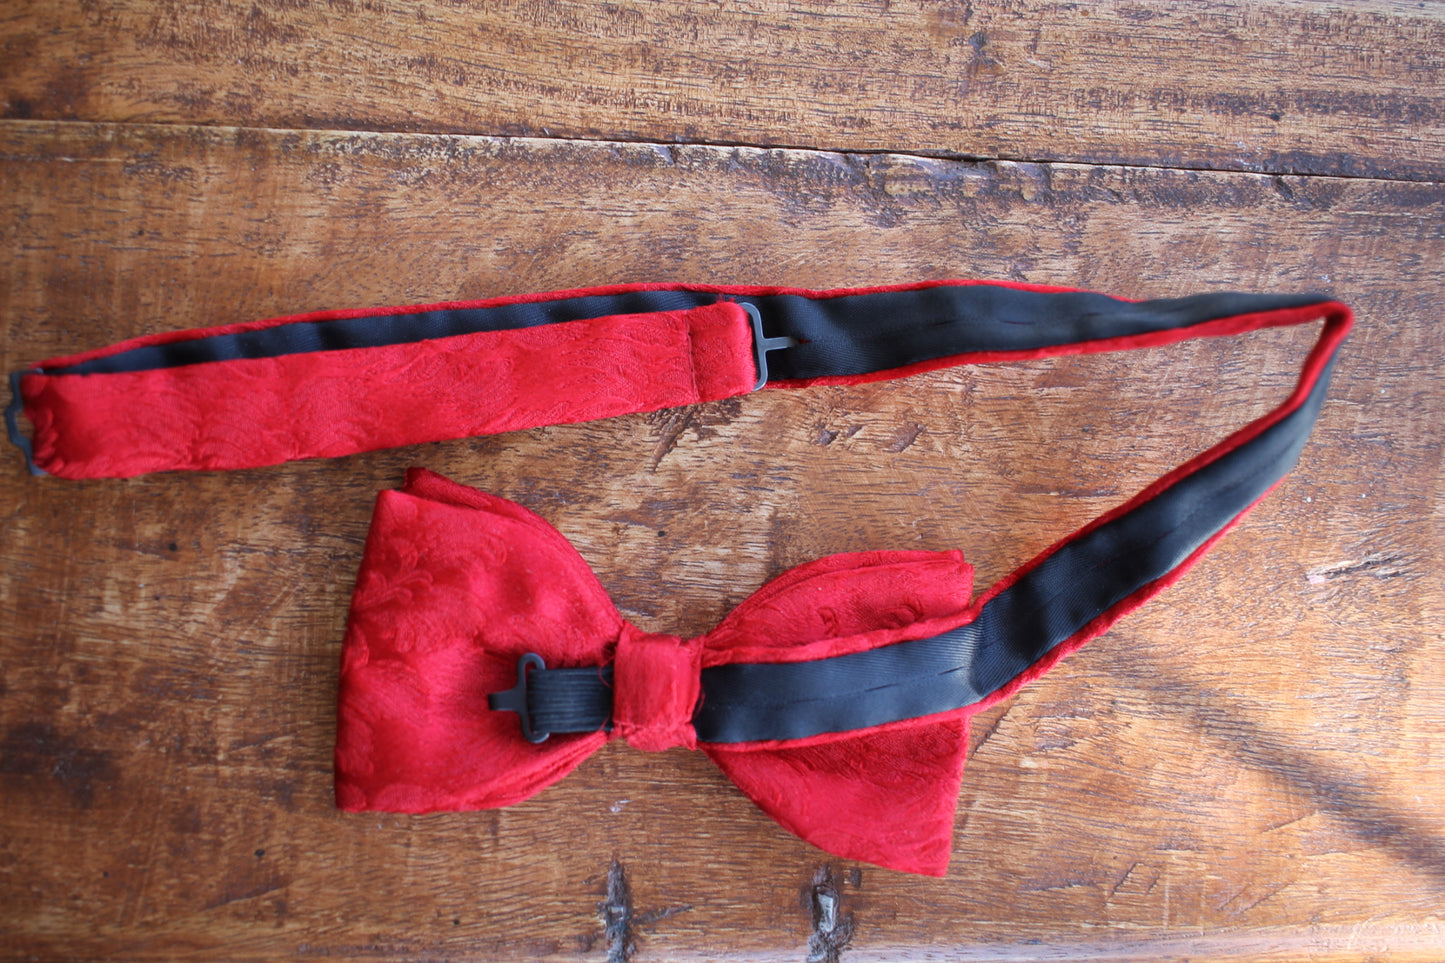 Vintage Frederick Theak pure silk pre-tied red jacquard bow tie adjustable